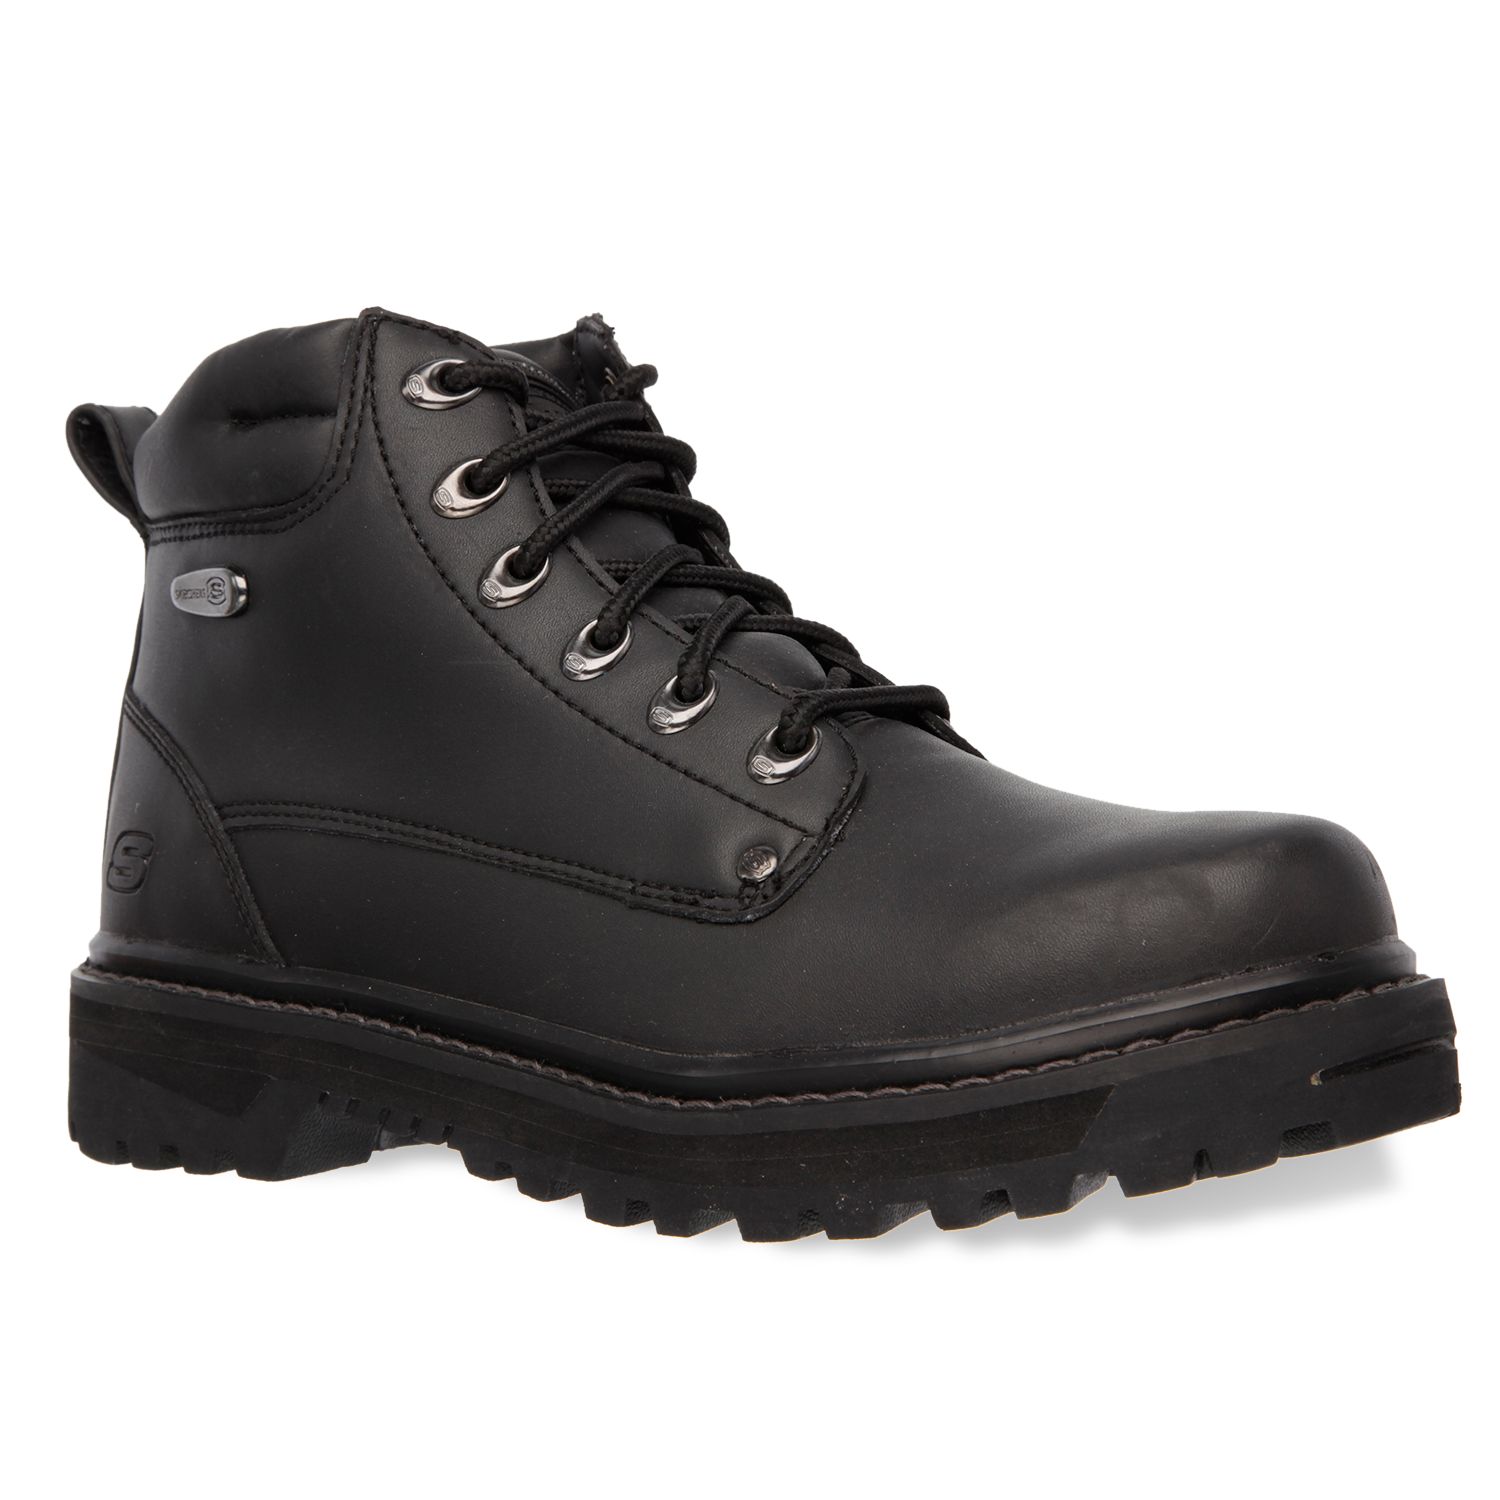 Mens Black Skechers Boots - Shoes | Kohl's